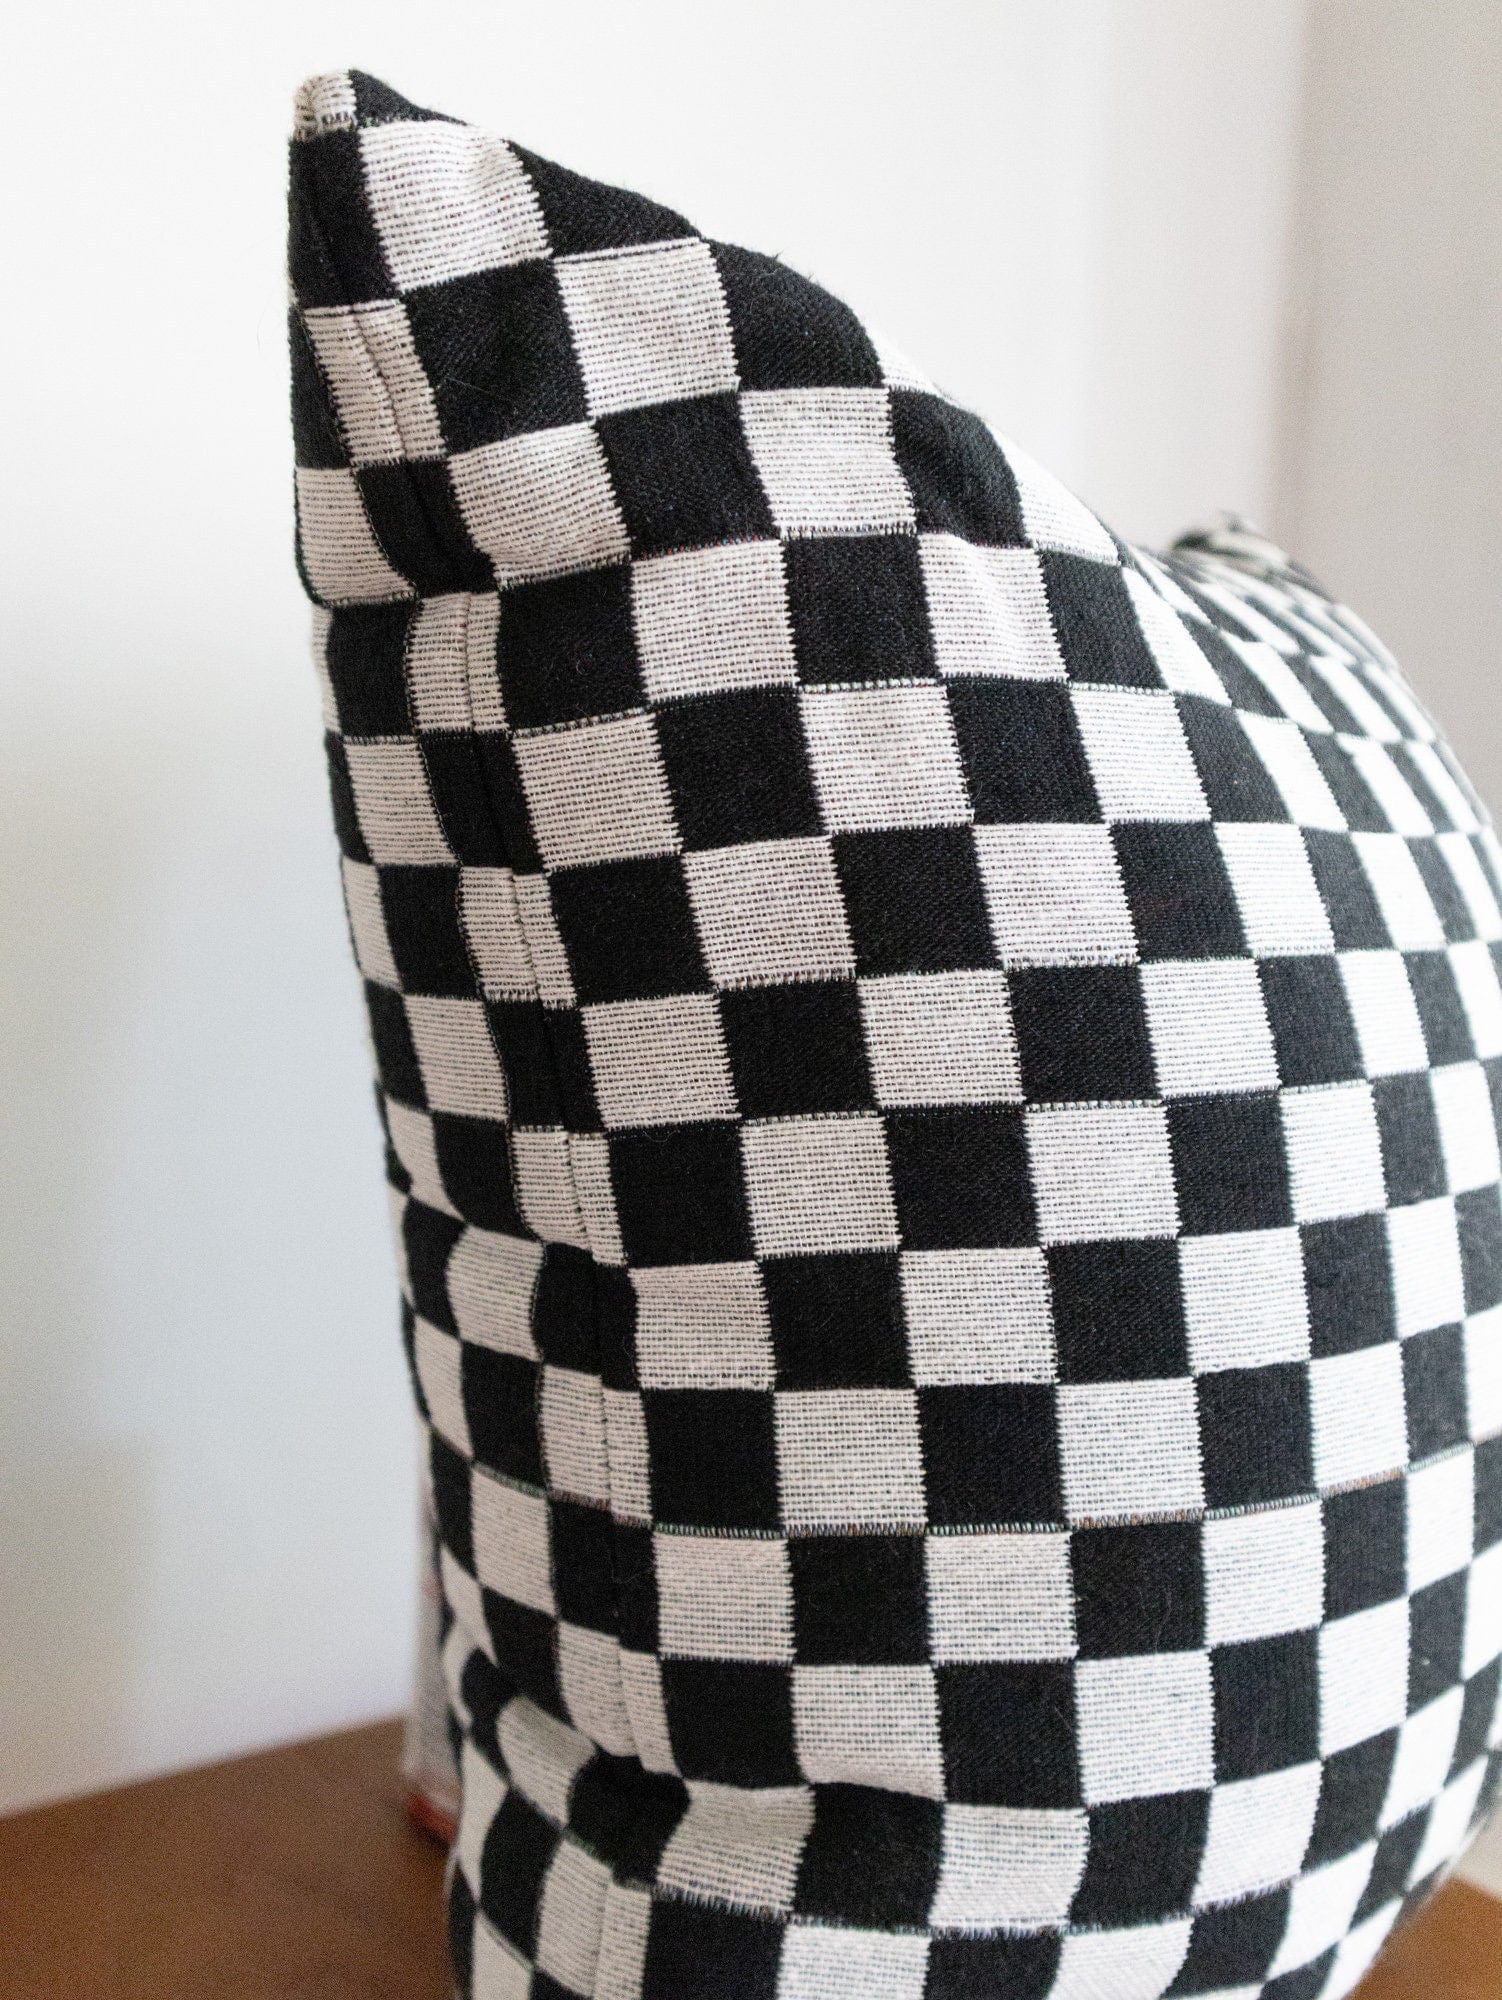 Checker Pillow